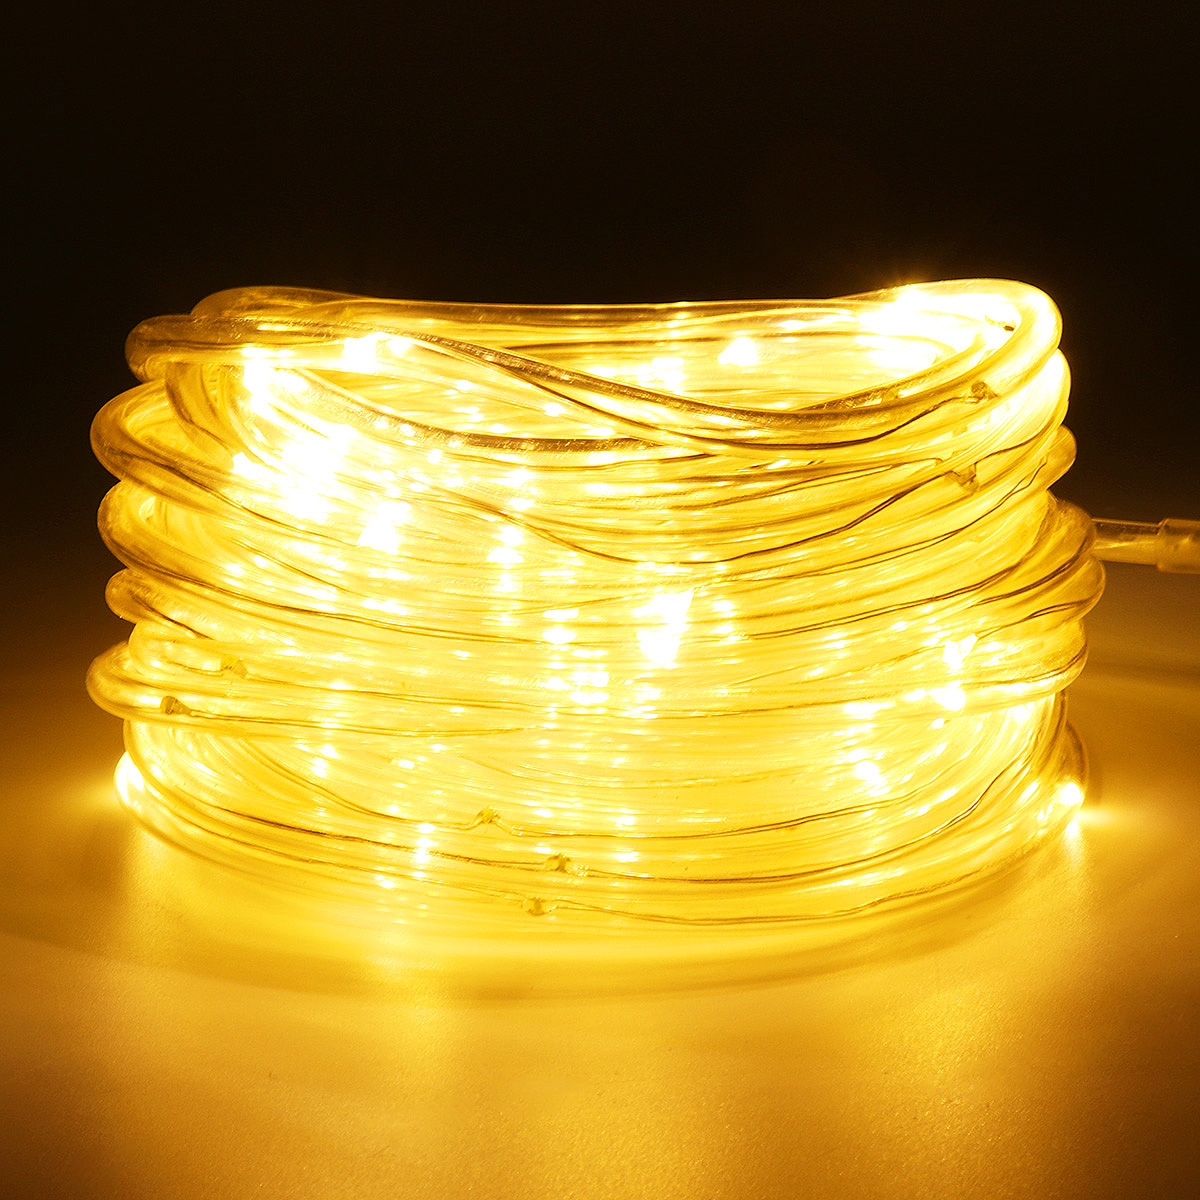 10M-100LED-Outdoor-Tube-Rope-Strip-String-Light-RGB-Lamp-Xmas-Home-Decor-Lights-with-US-Plug-1795568-4